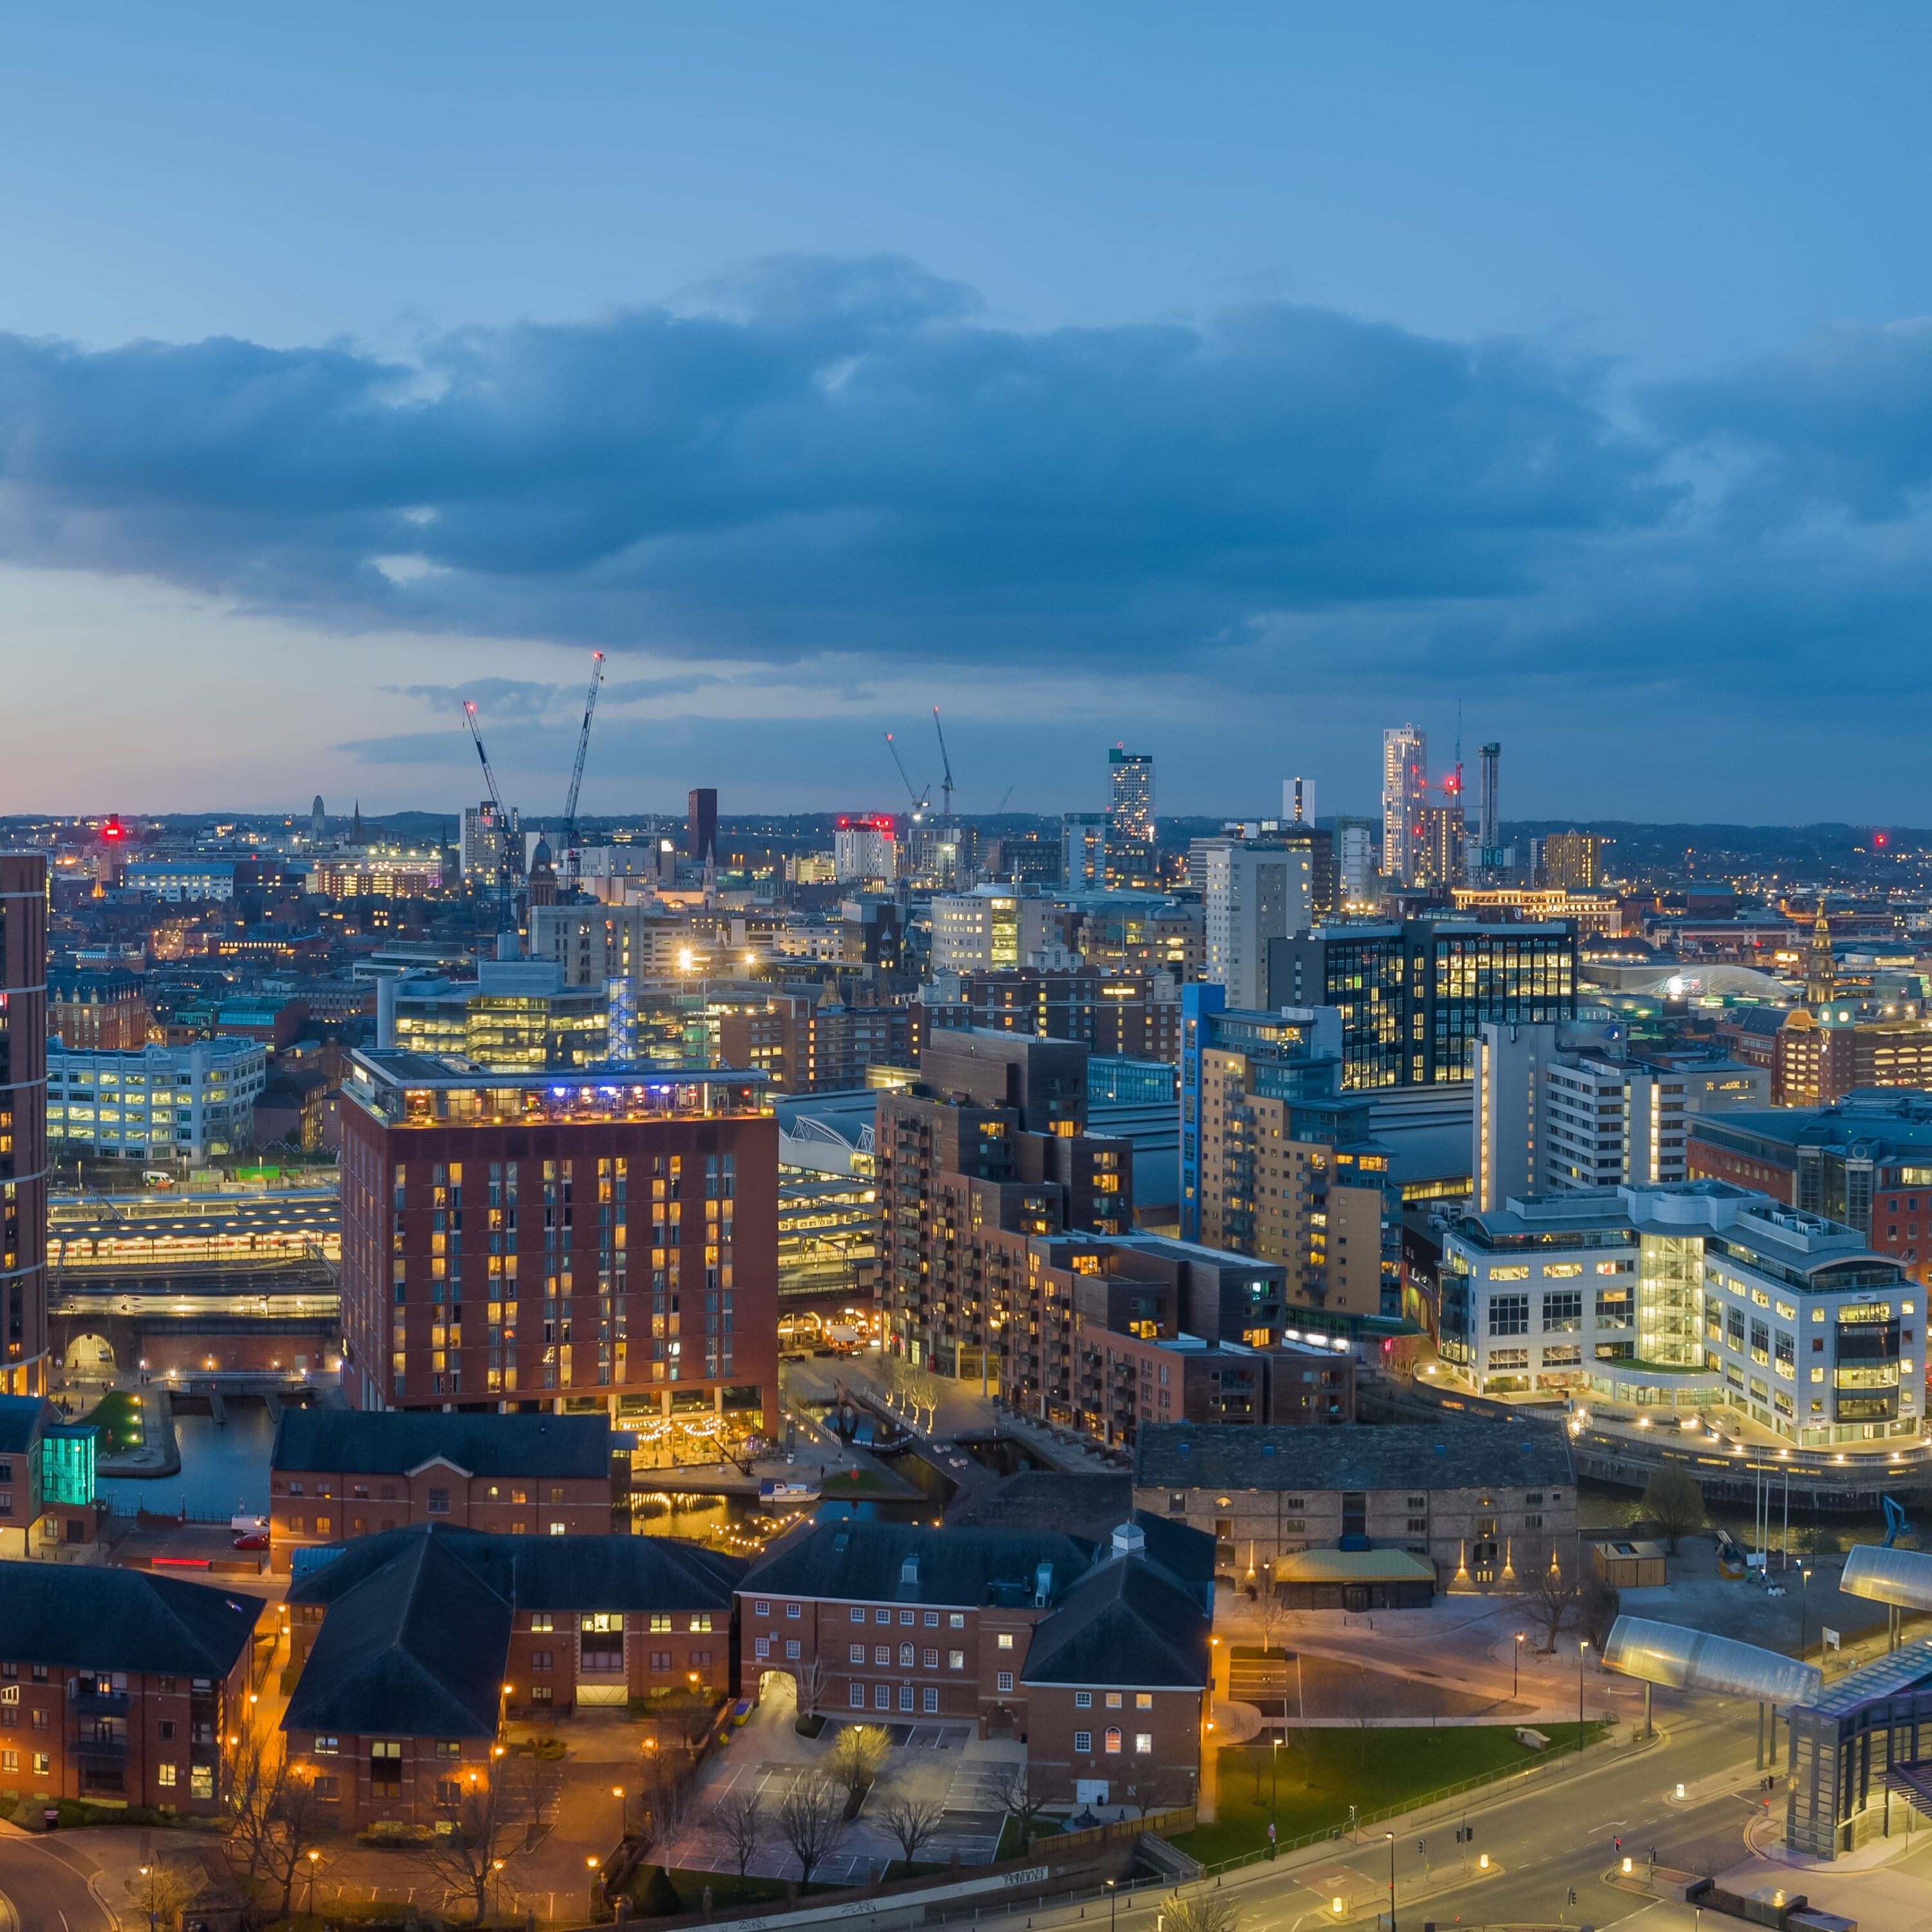 the city of Leeds, near Bradford